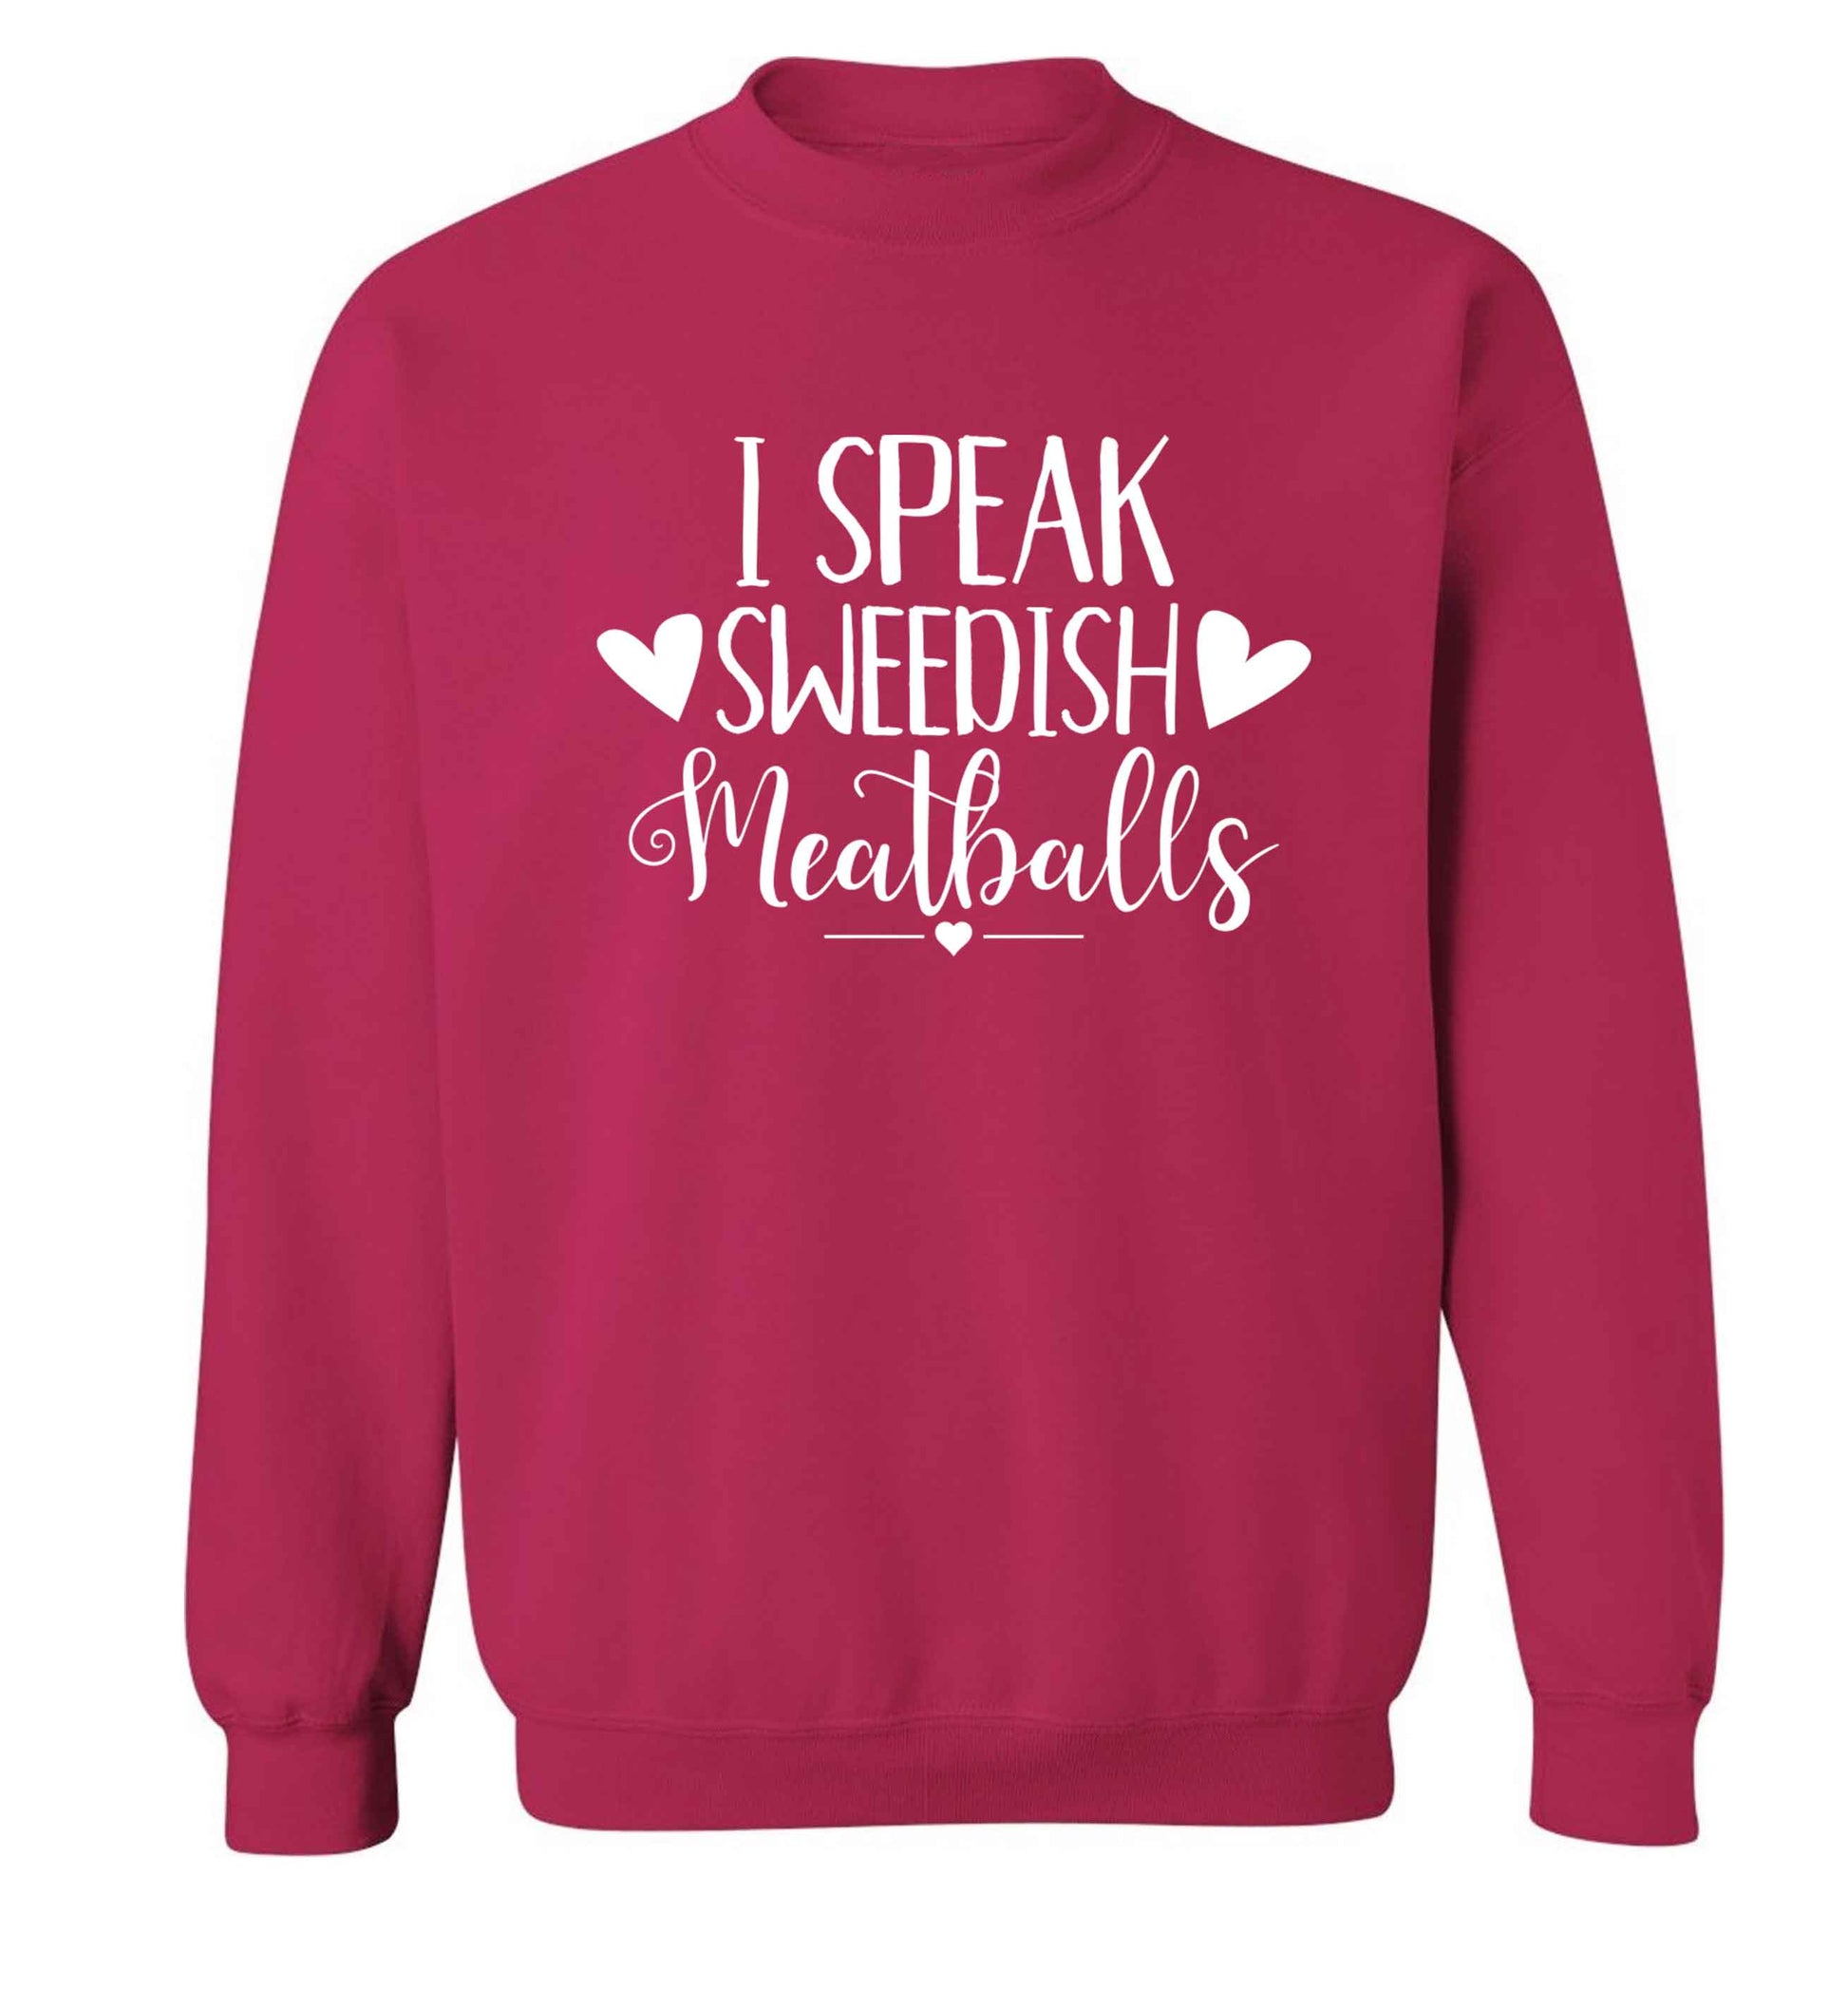 I speak sweedish...meatballs Adult's unisex pink Sweater 2XL